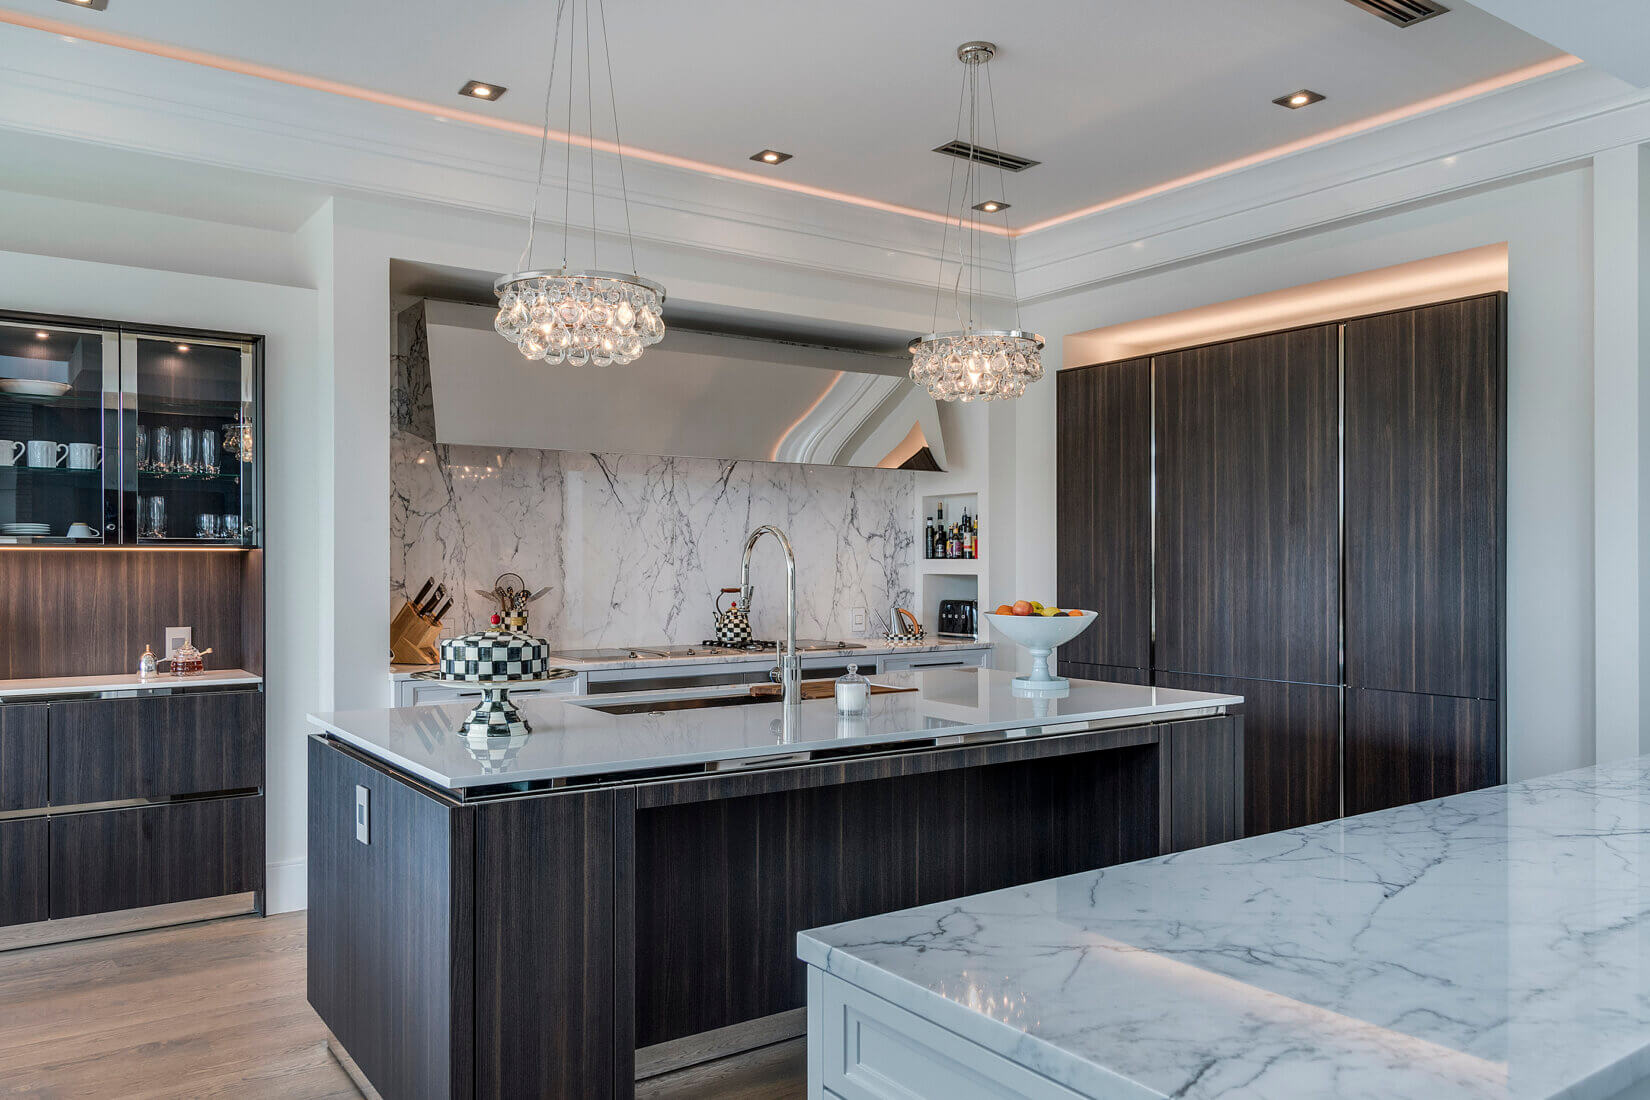 Elegant kitchen with white marble backsplash and dark cabinetry